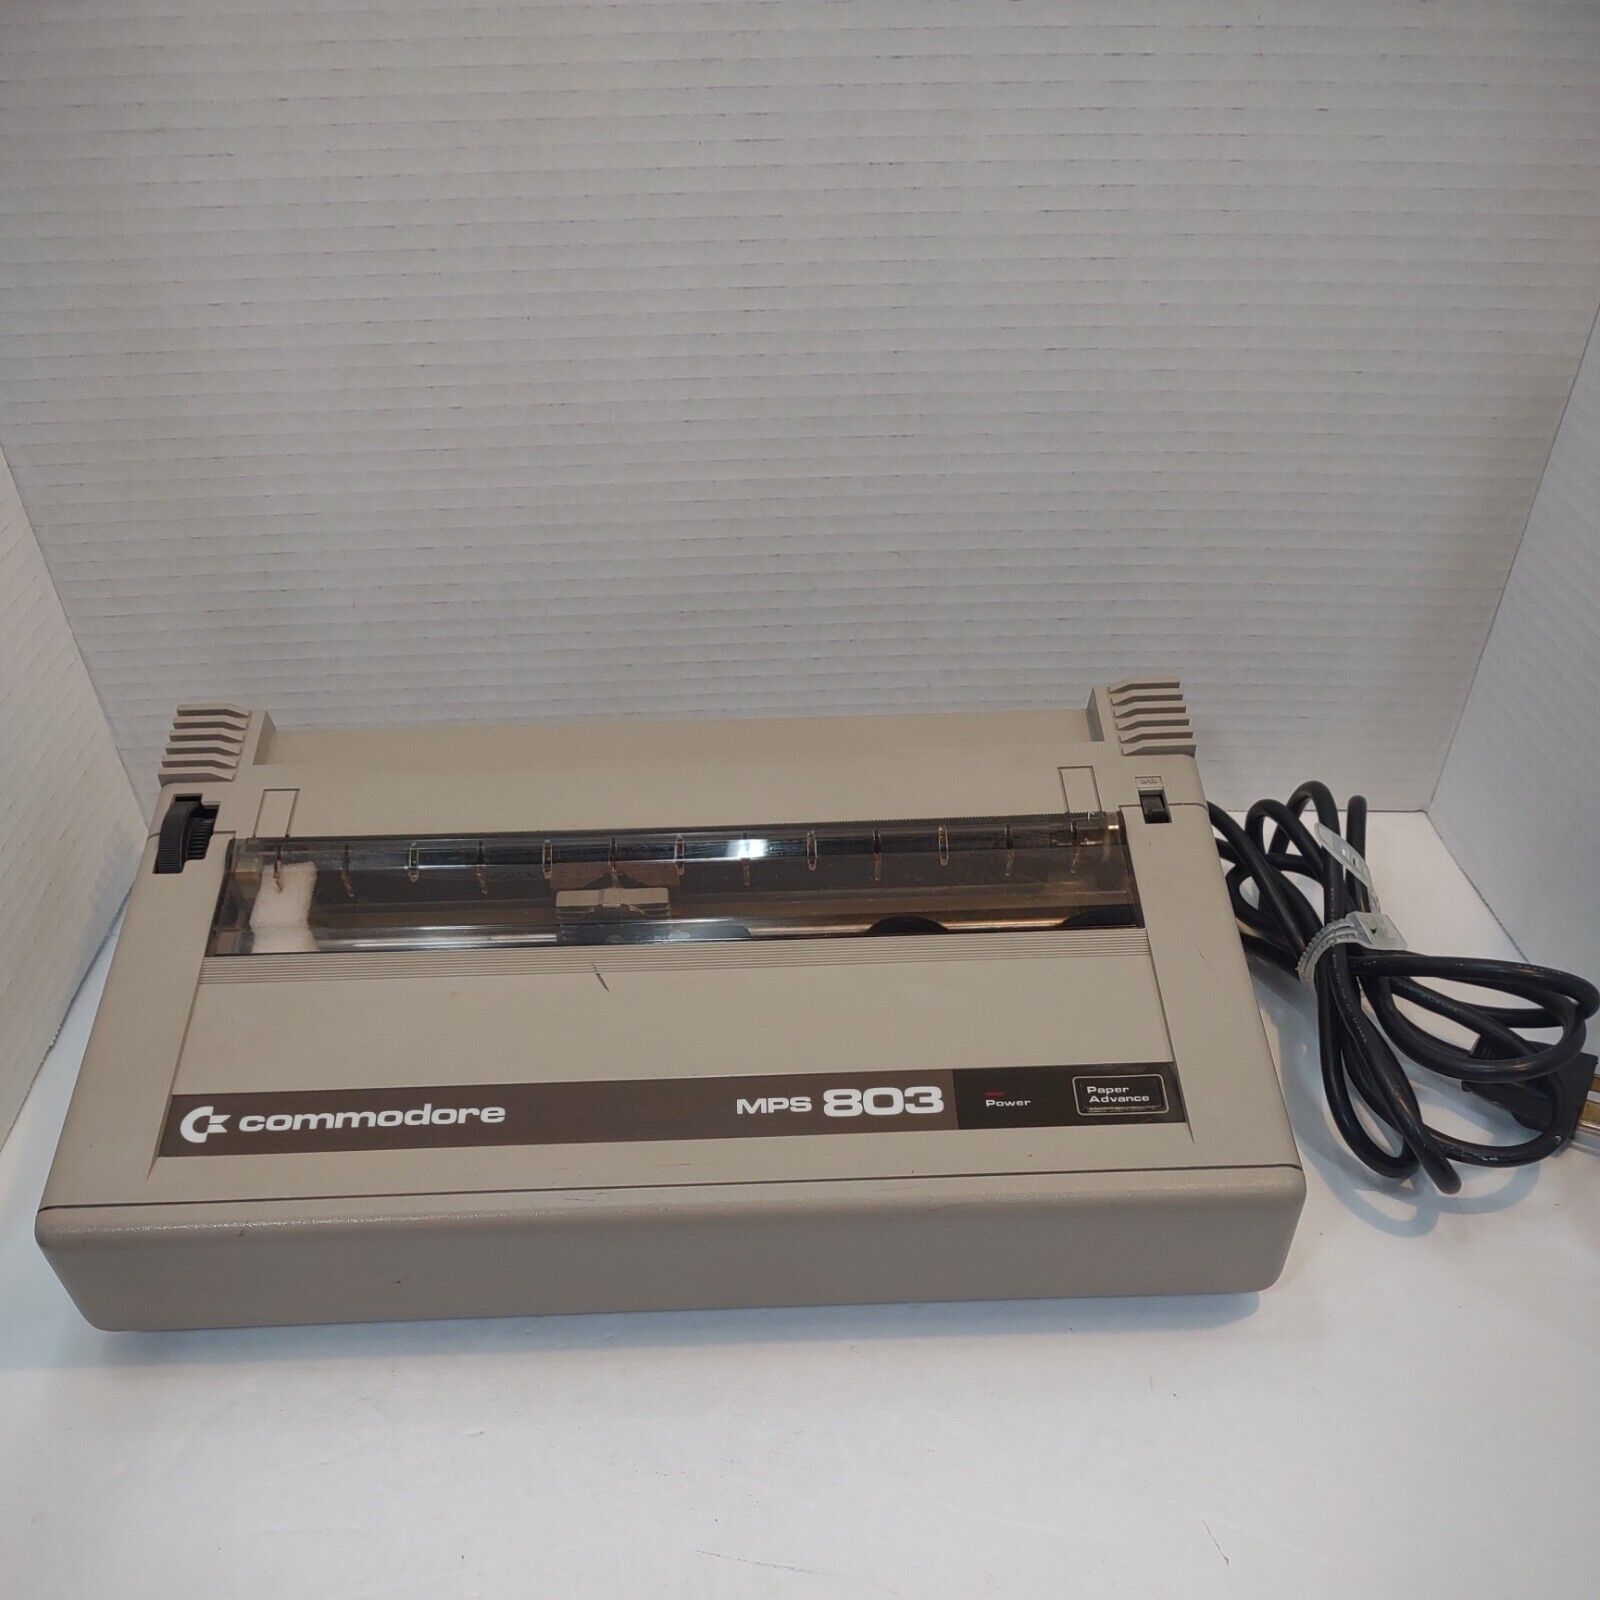 Commodore MPS 803 Dot Matrix Printer Computer Printer Vintage Tested for Power